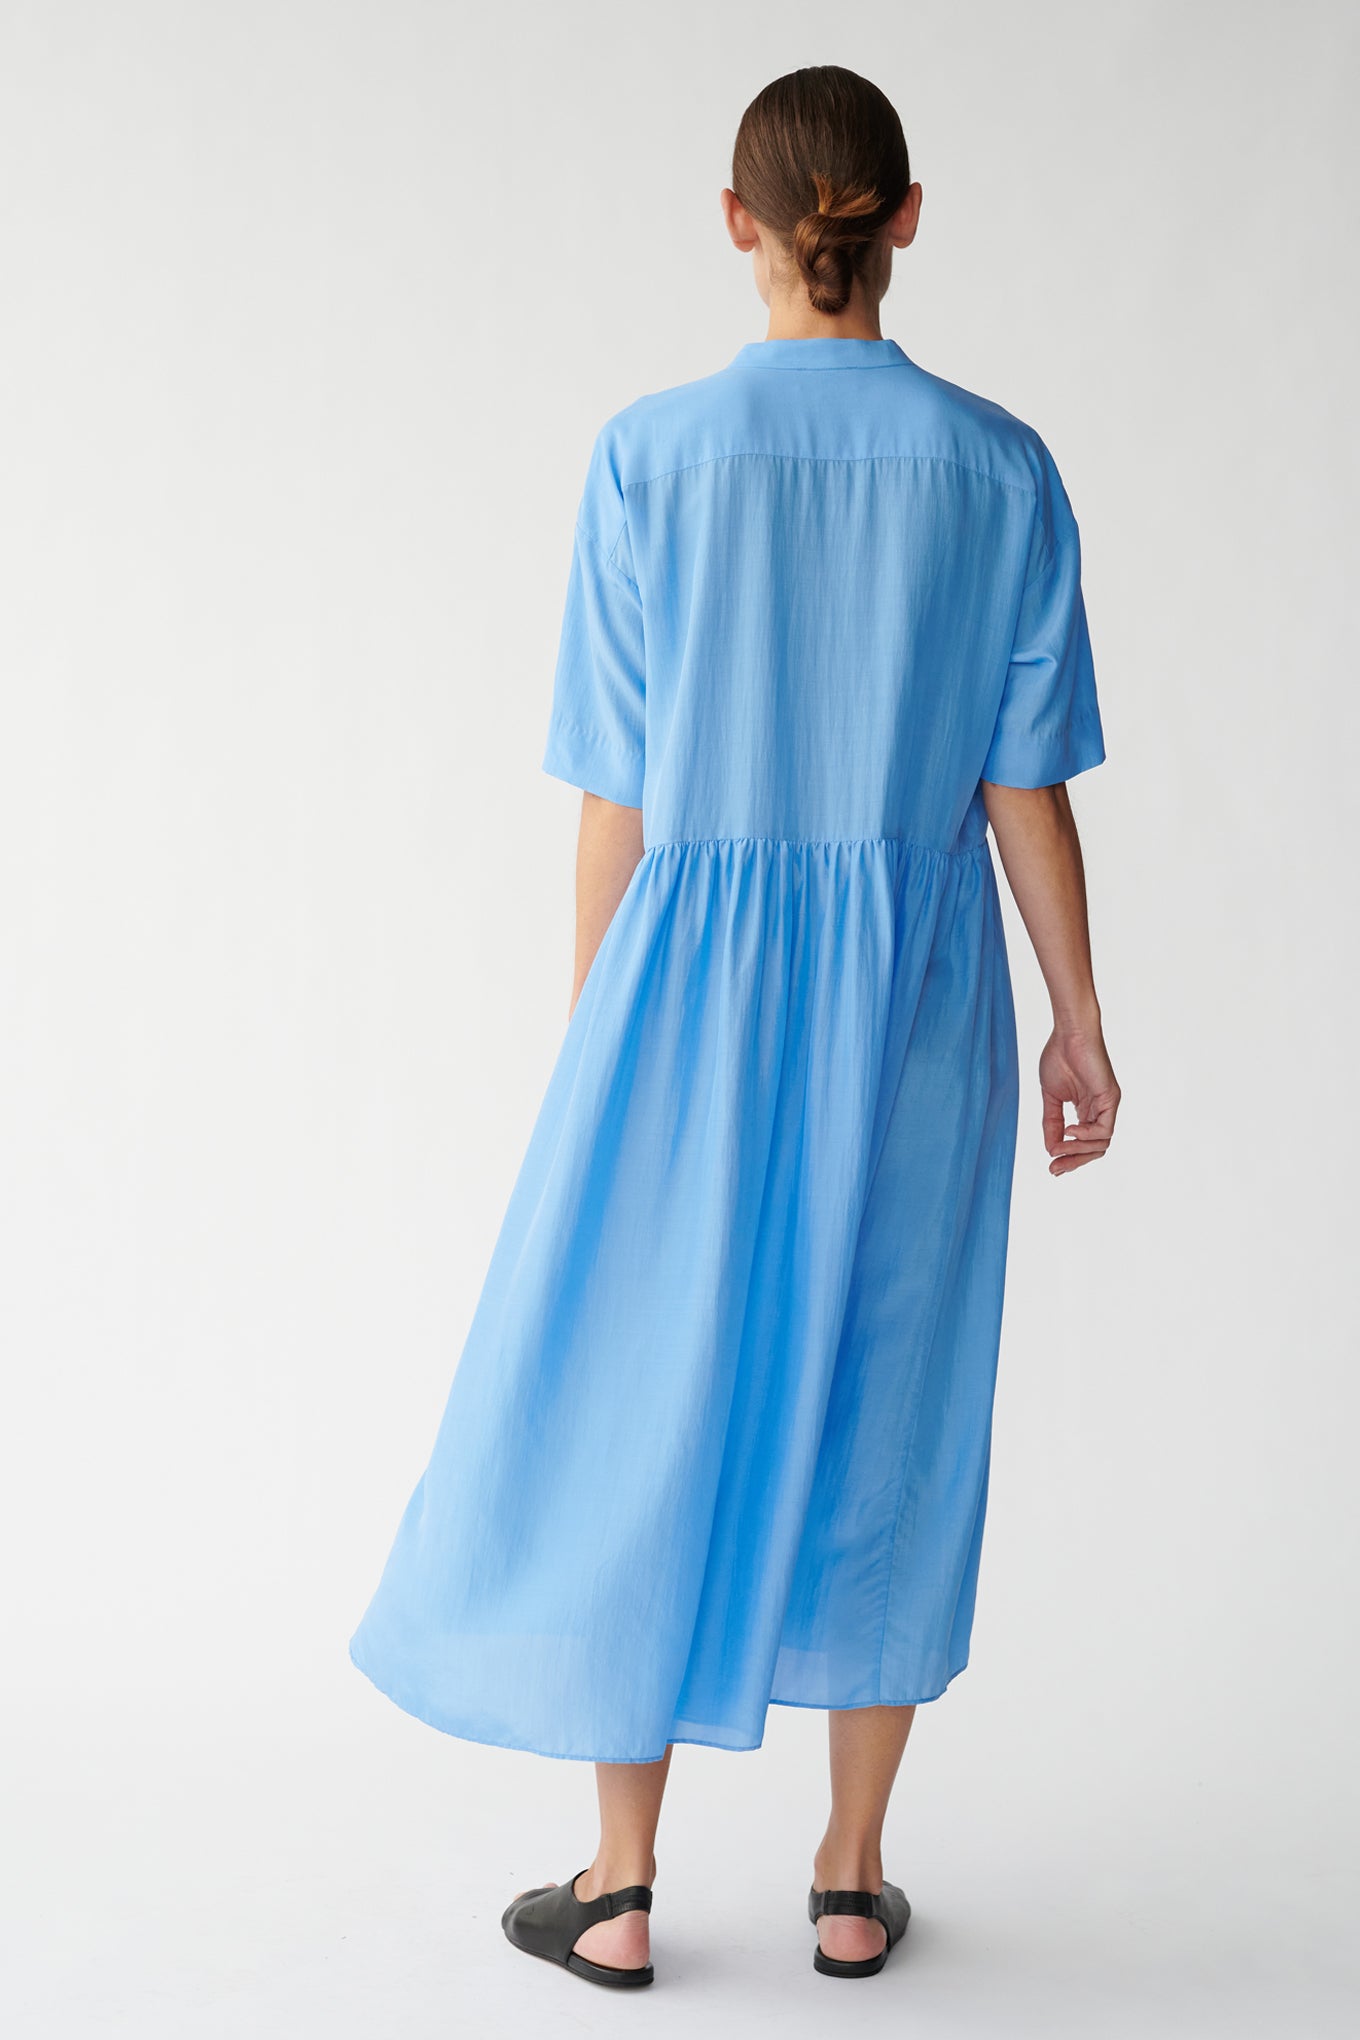 BLAKE DRESS - PACIFIC BLUE - RECYCLED SILK/SILK